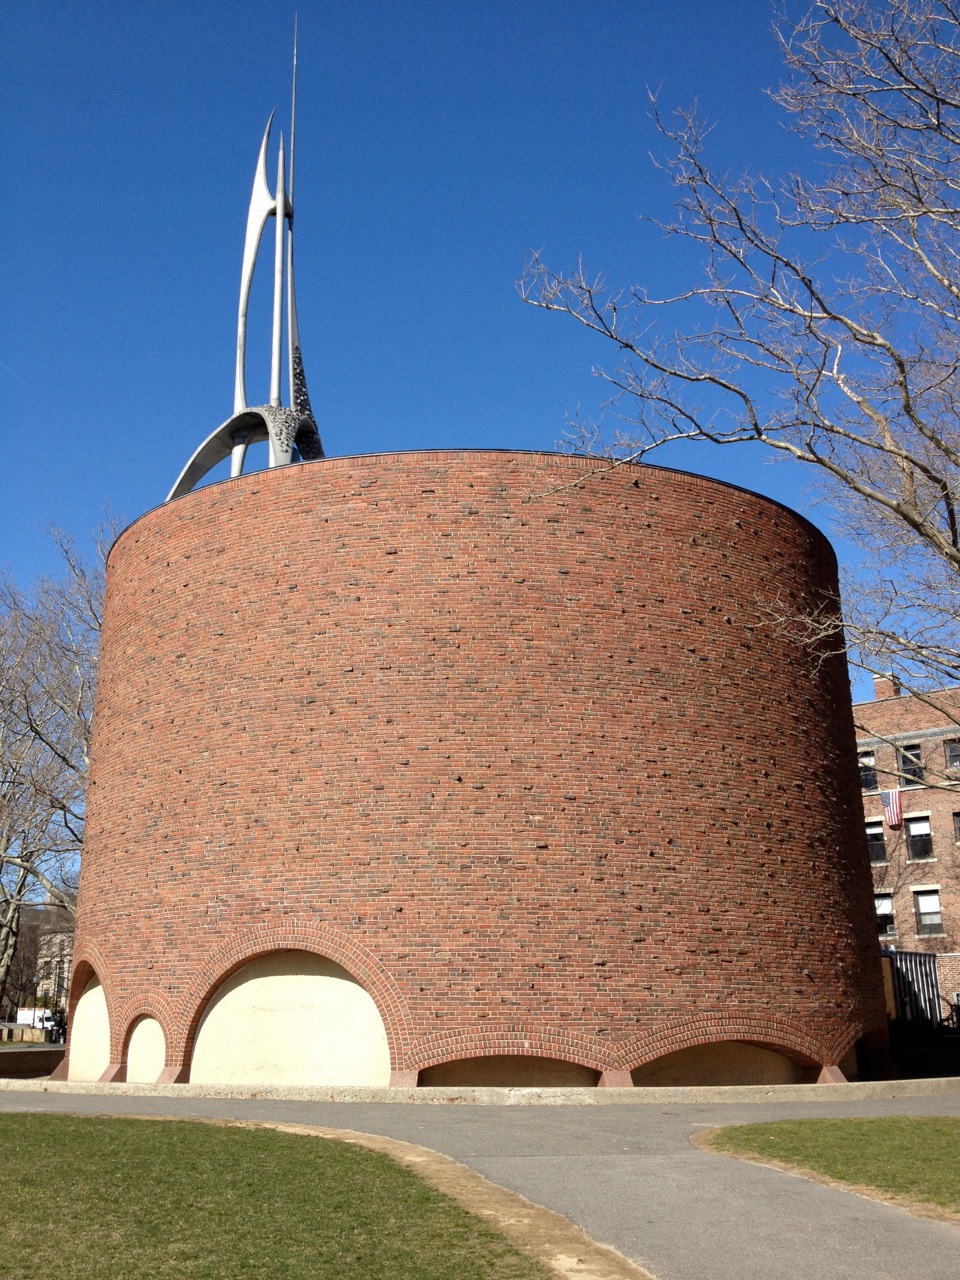 A Modernist: The MIT Chapel (1955)